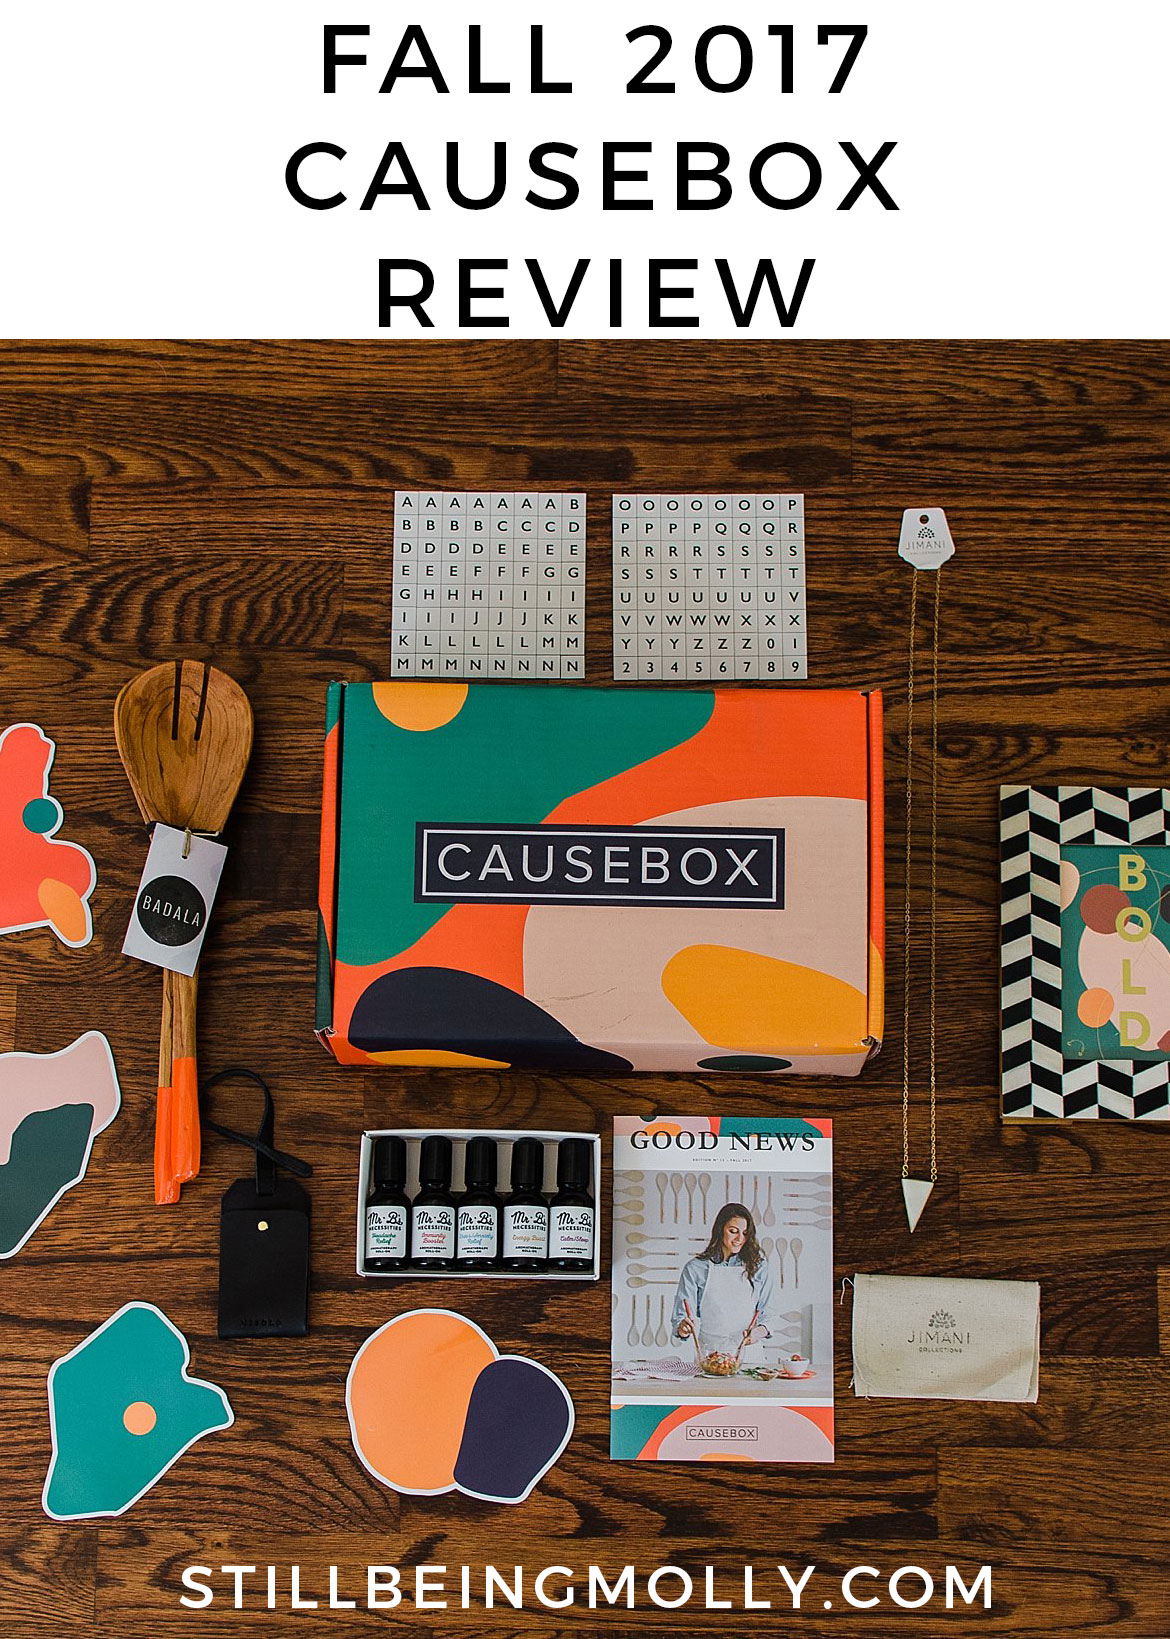 Fall 2017 CAUSEBOX Review - Fall 2017 CAUSEBOX Review by North Carolina ethical blogger Still Being Molly